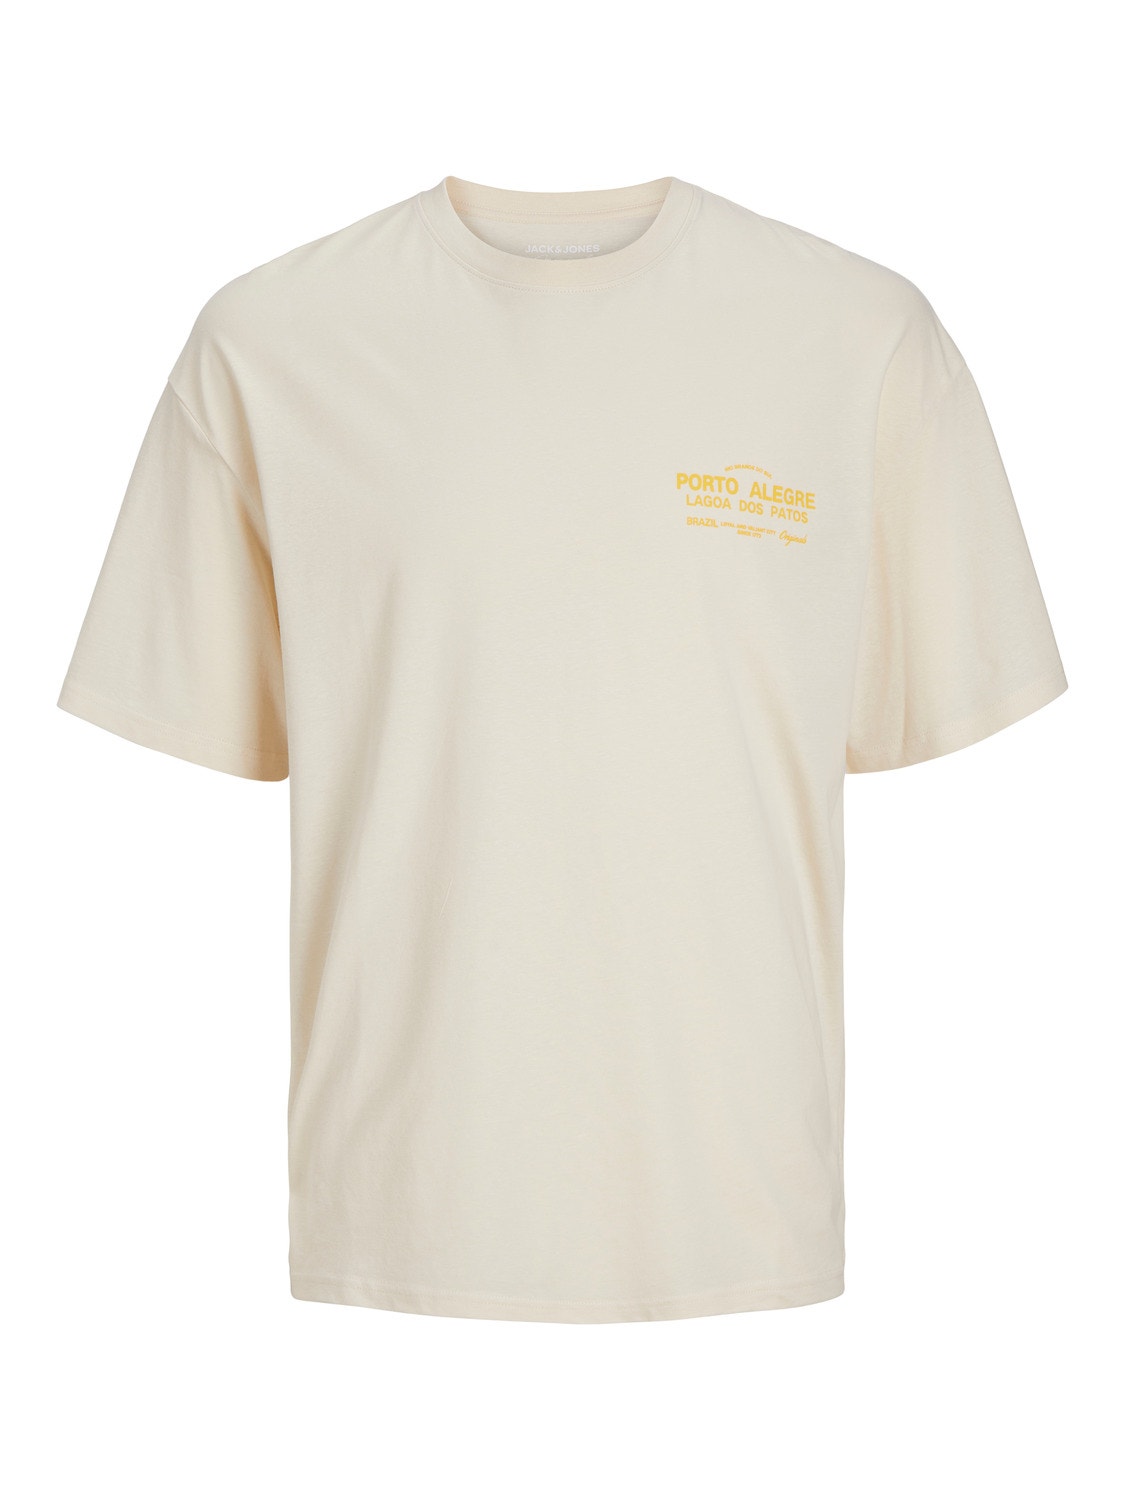 Jack & Jones Plain Crew neck T-shirt -Buttercream - 12257353